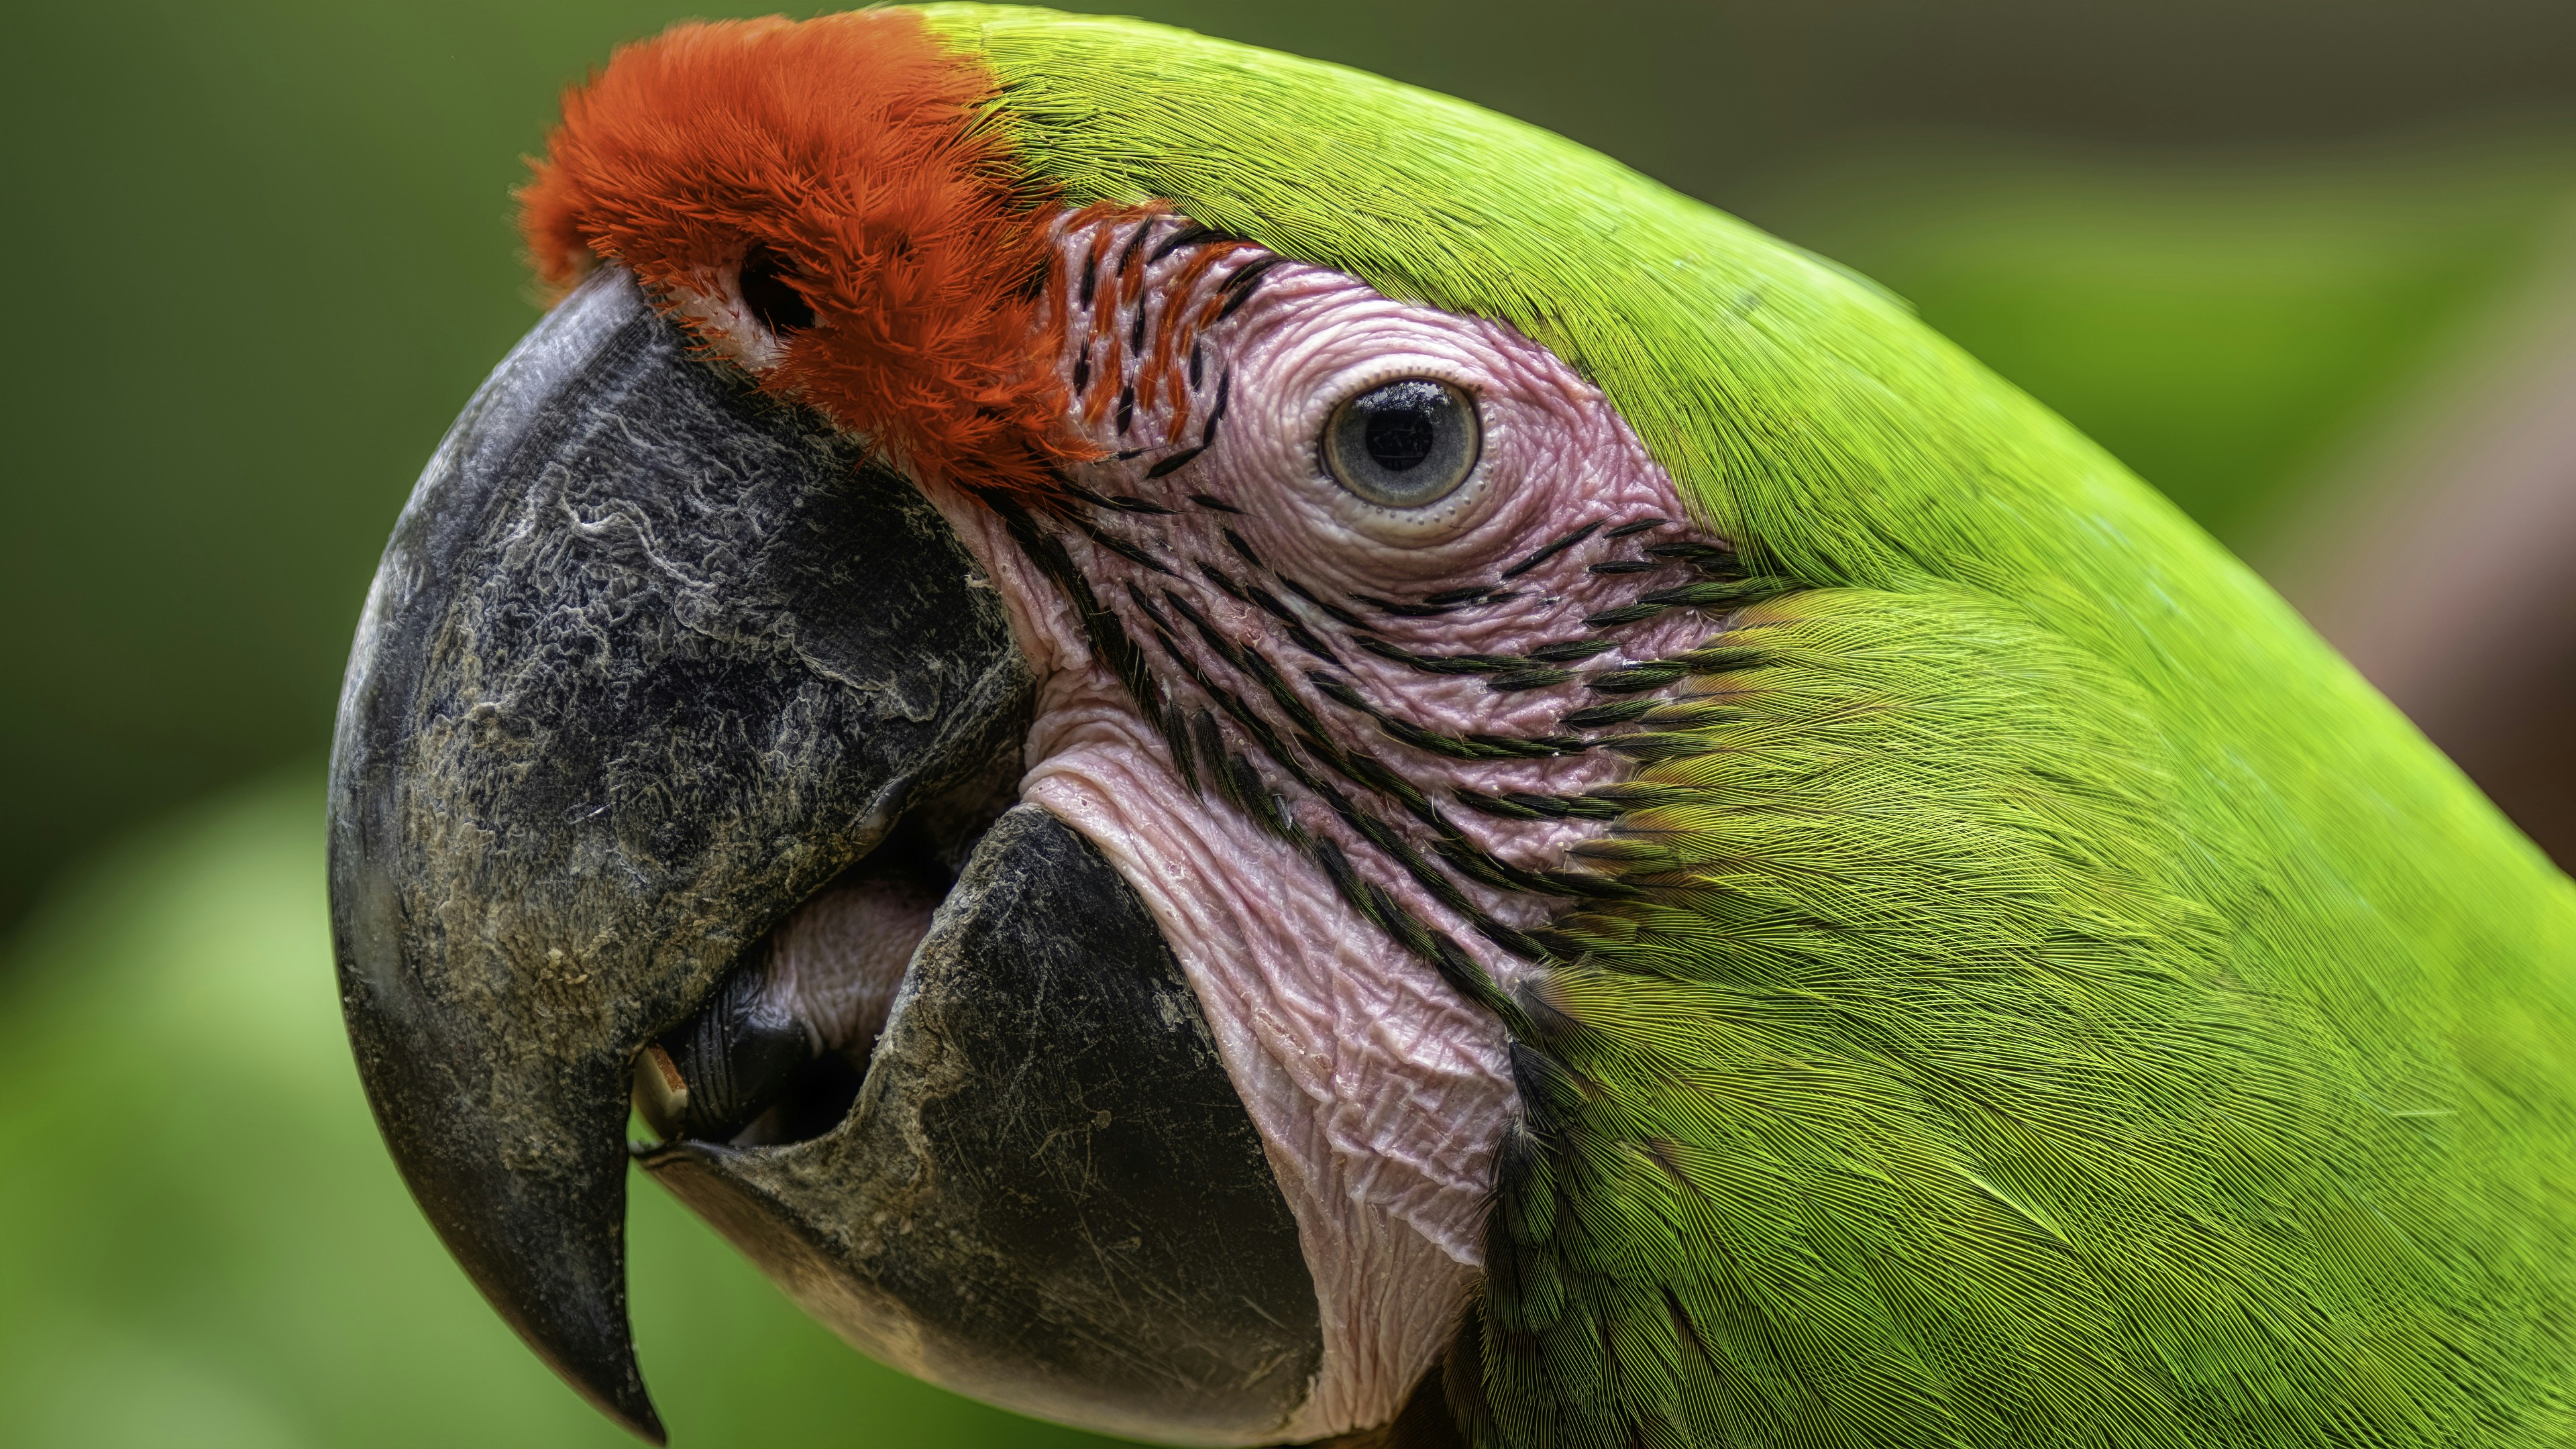 Wild green parrot close up. Enjoy the details.